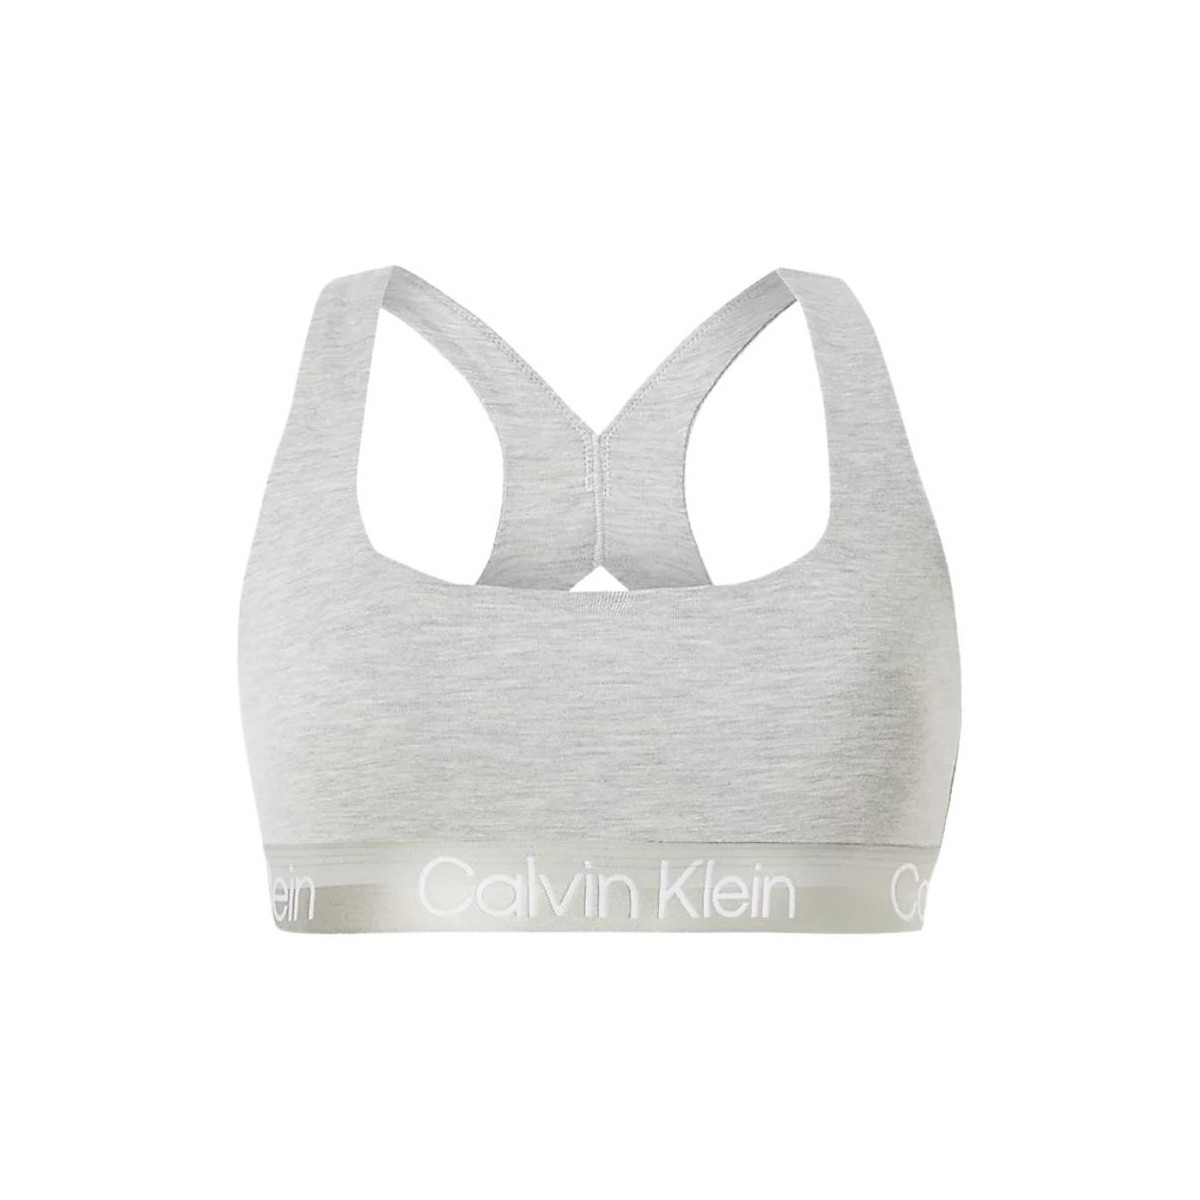 Sous-vêtements Femme Calvin Klein Swimwear Pantaloncini per bikini nero argento Brassiere  Ref 55860 Gris Gris